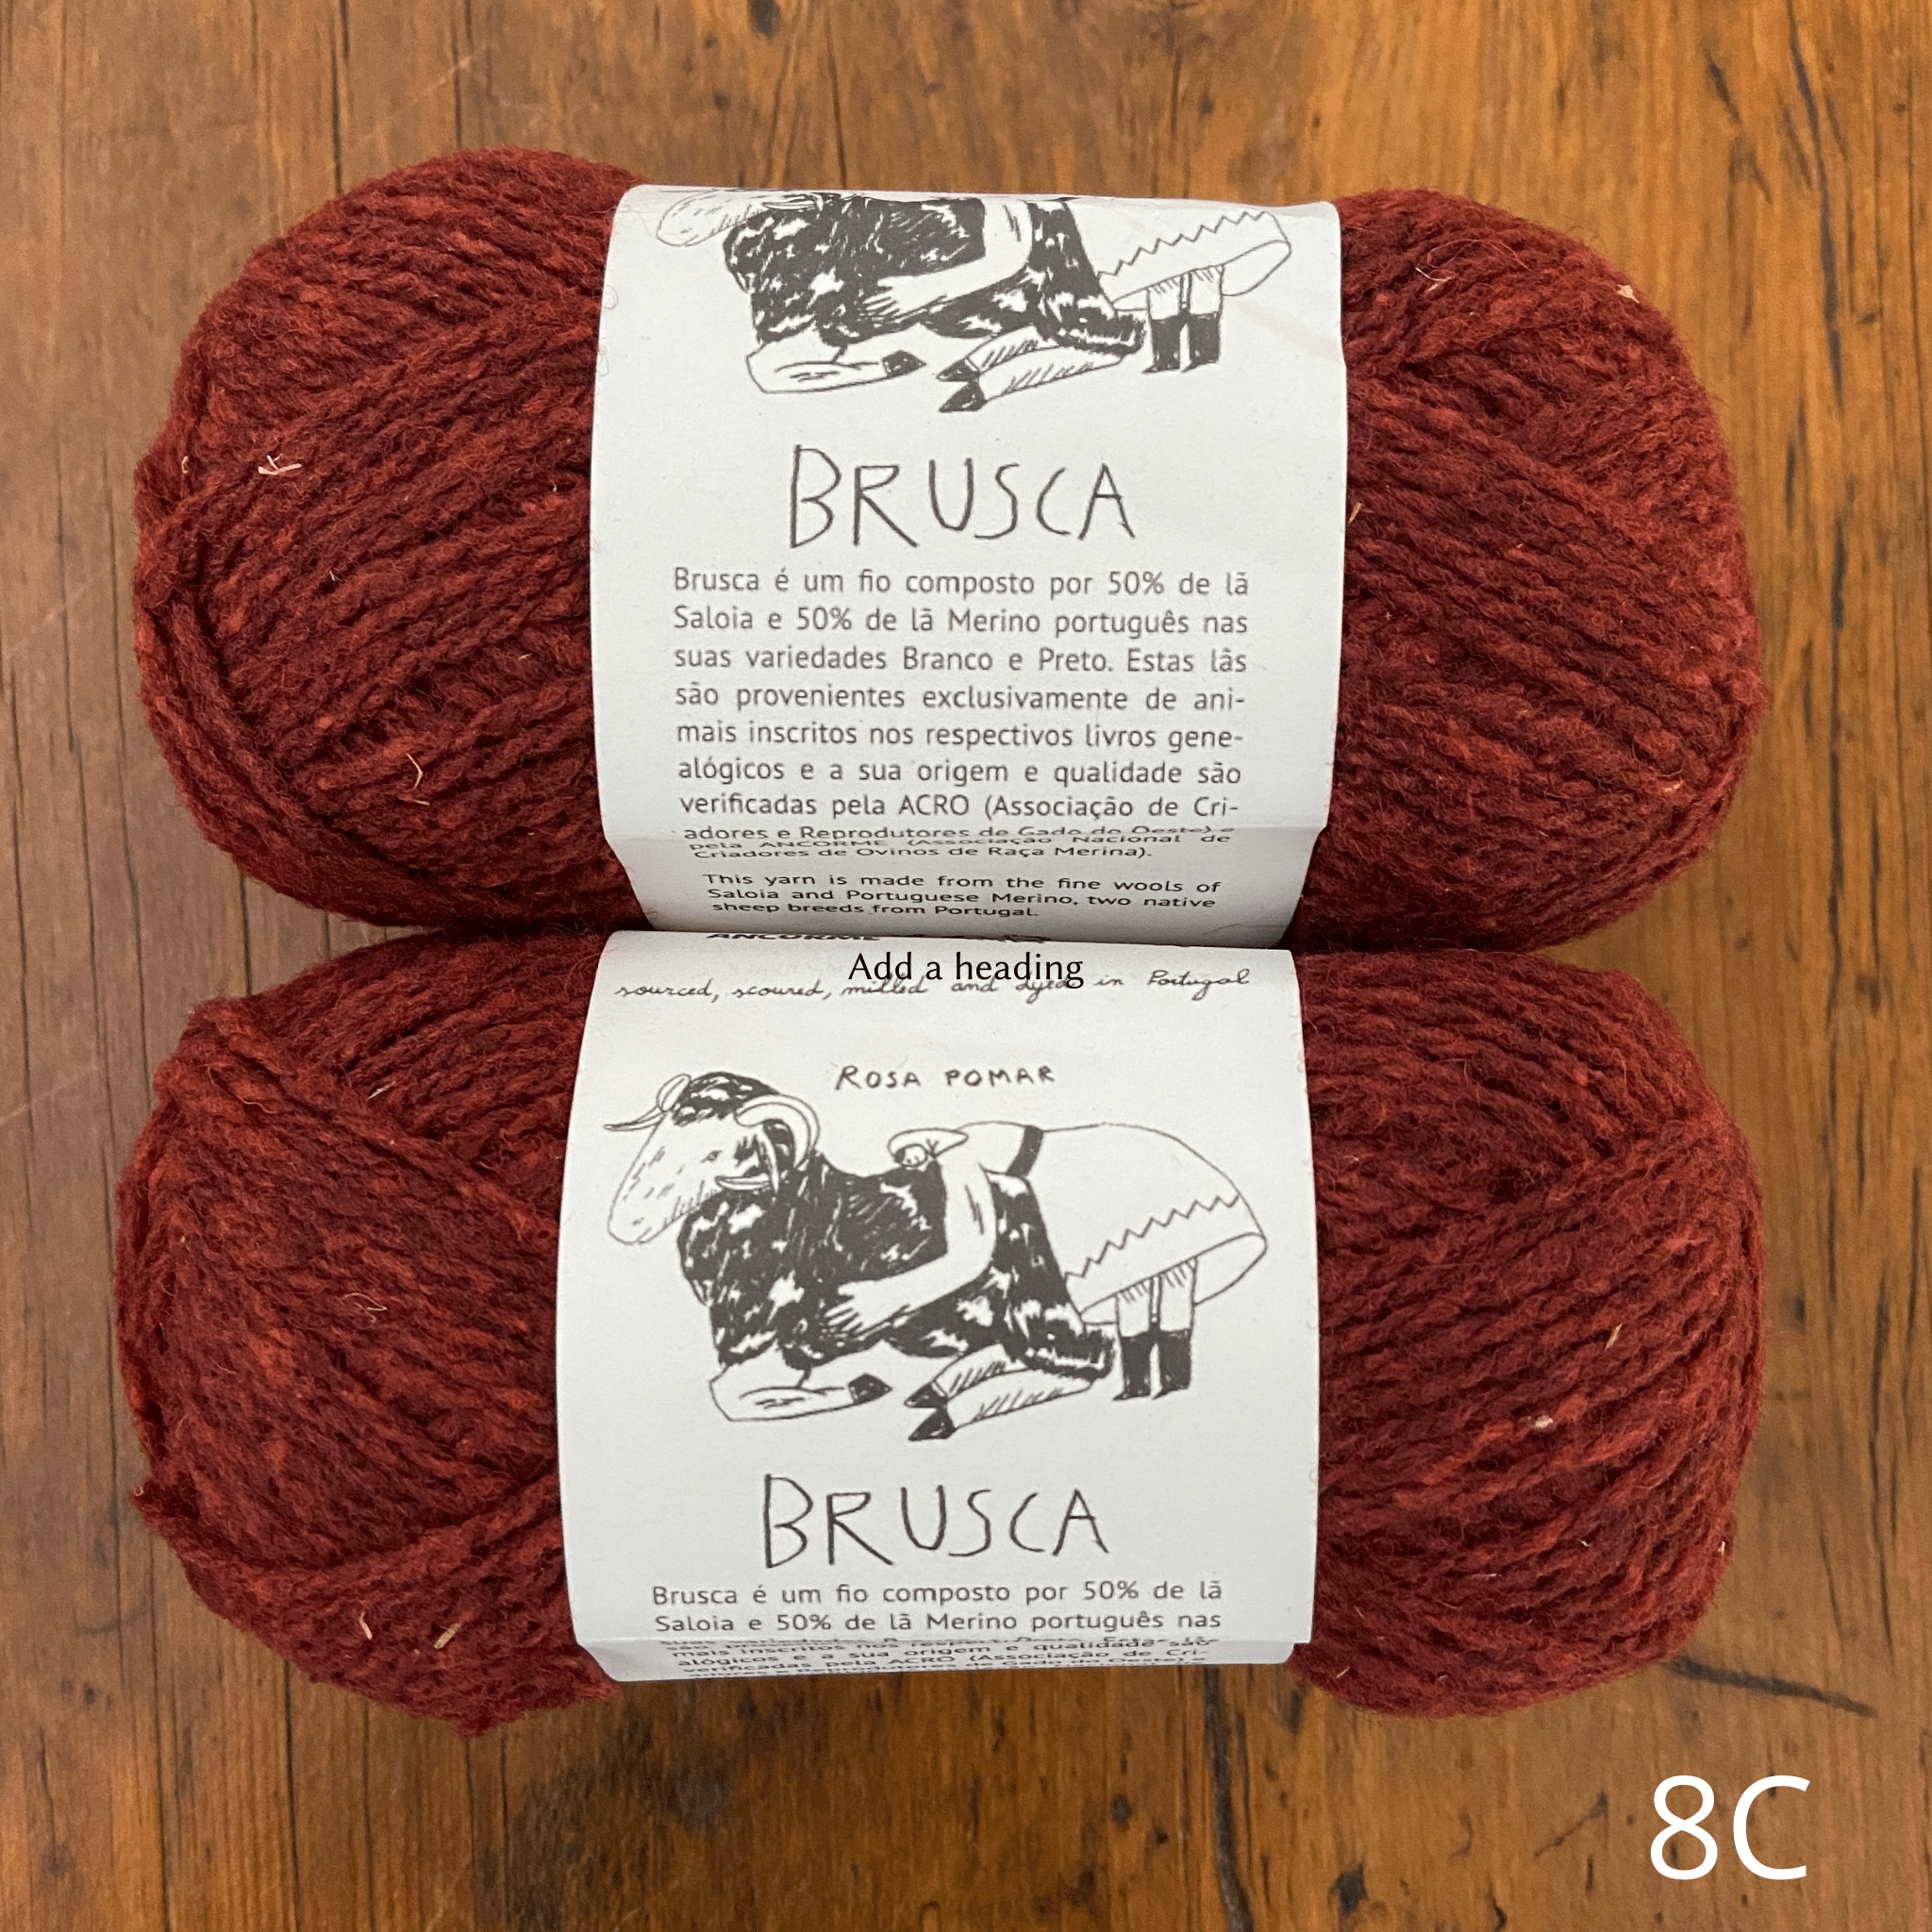 The Woolly Thistle Retrosaria Brusca DK Yarn in 8C (burgundy)